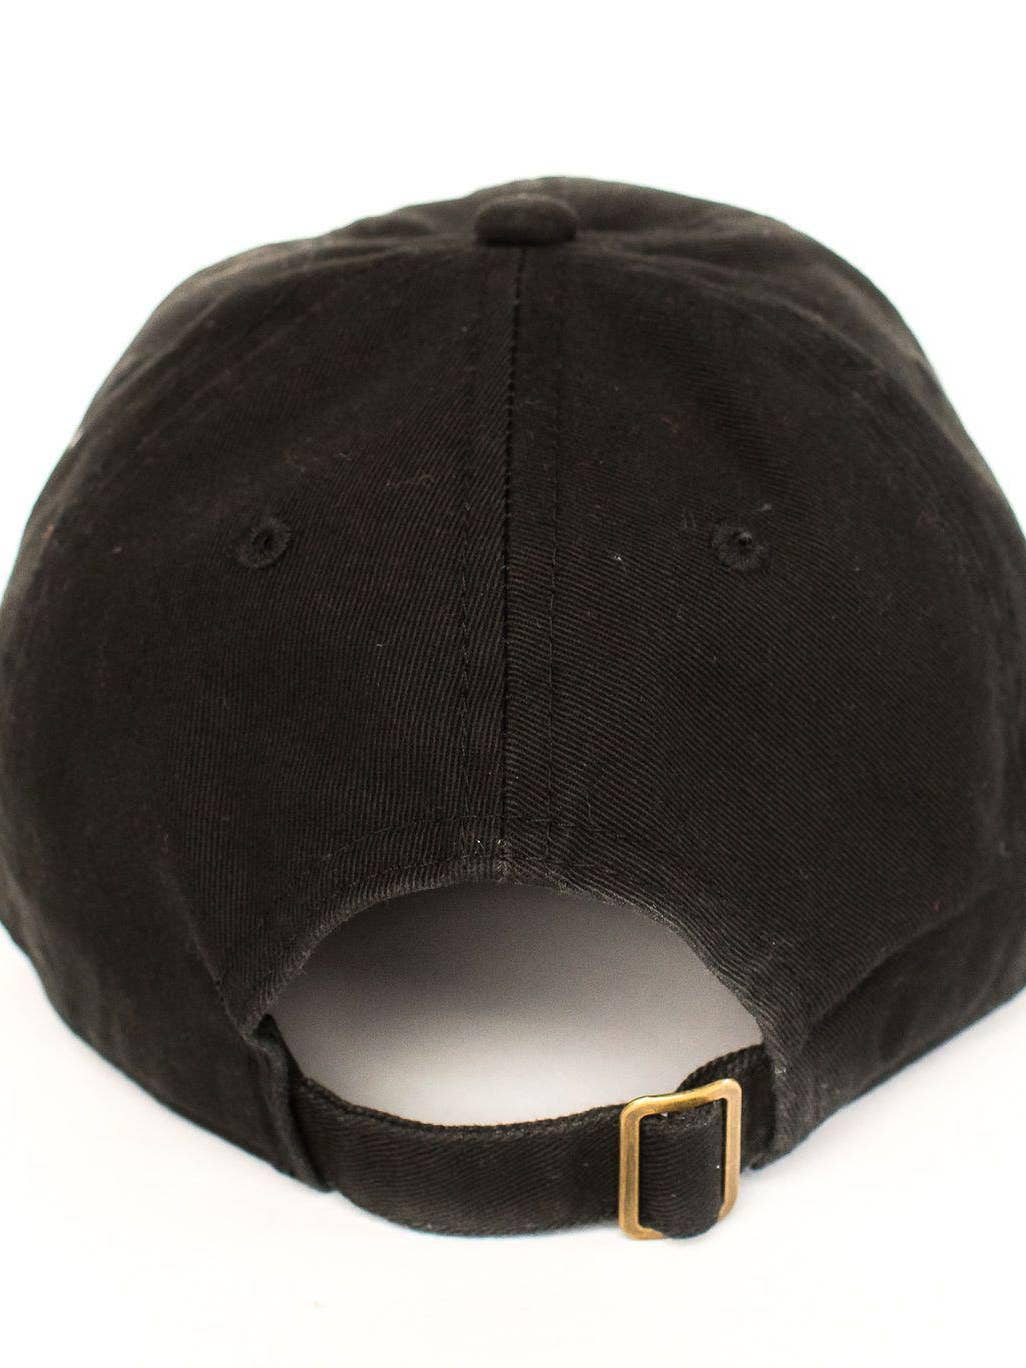 Black Soccer Hat